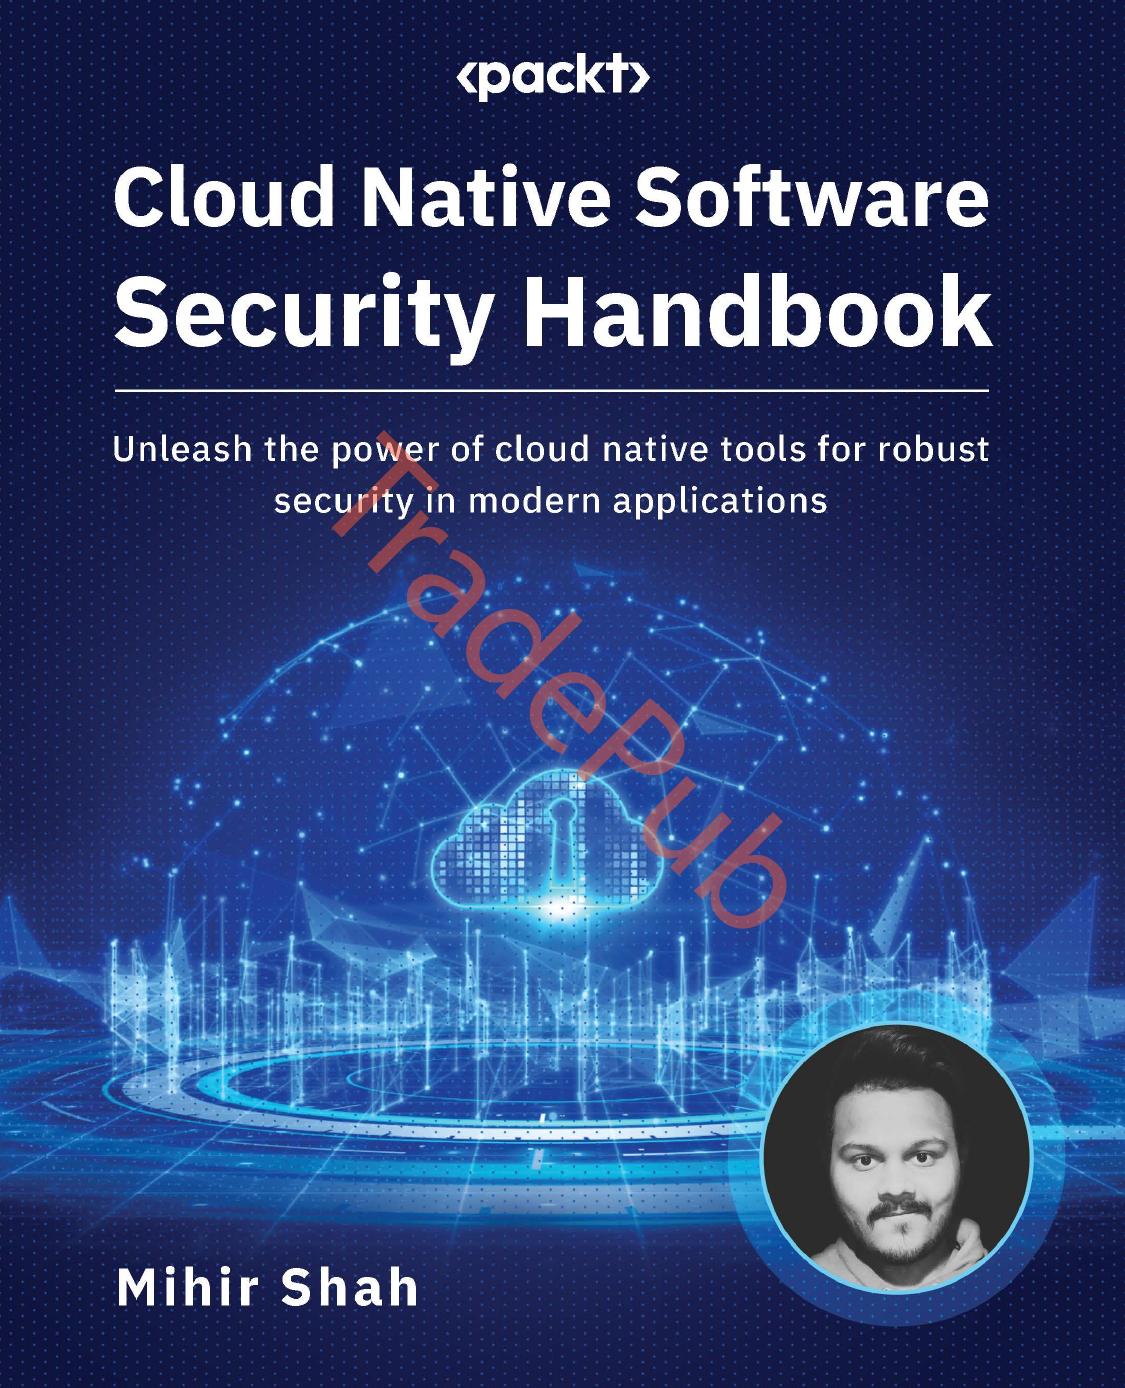 Cloud Native Software Security Handbook - Trade Publication